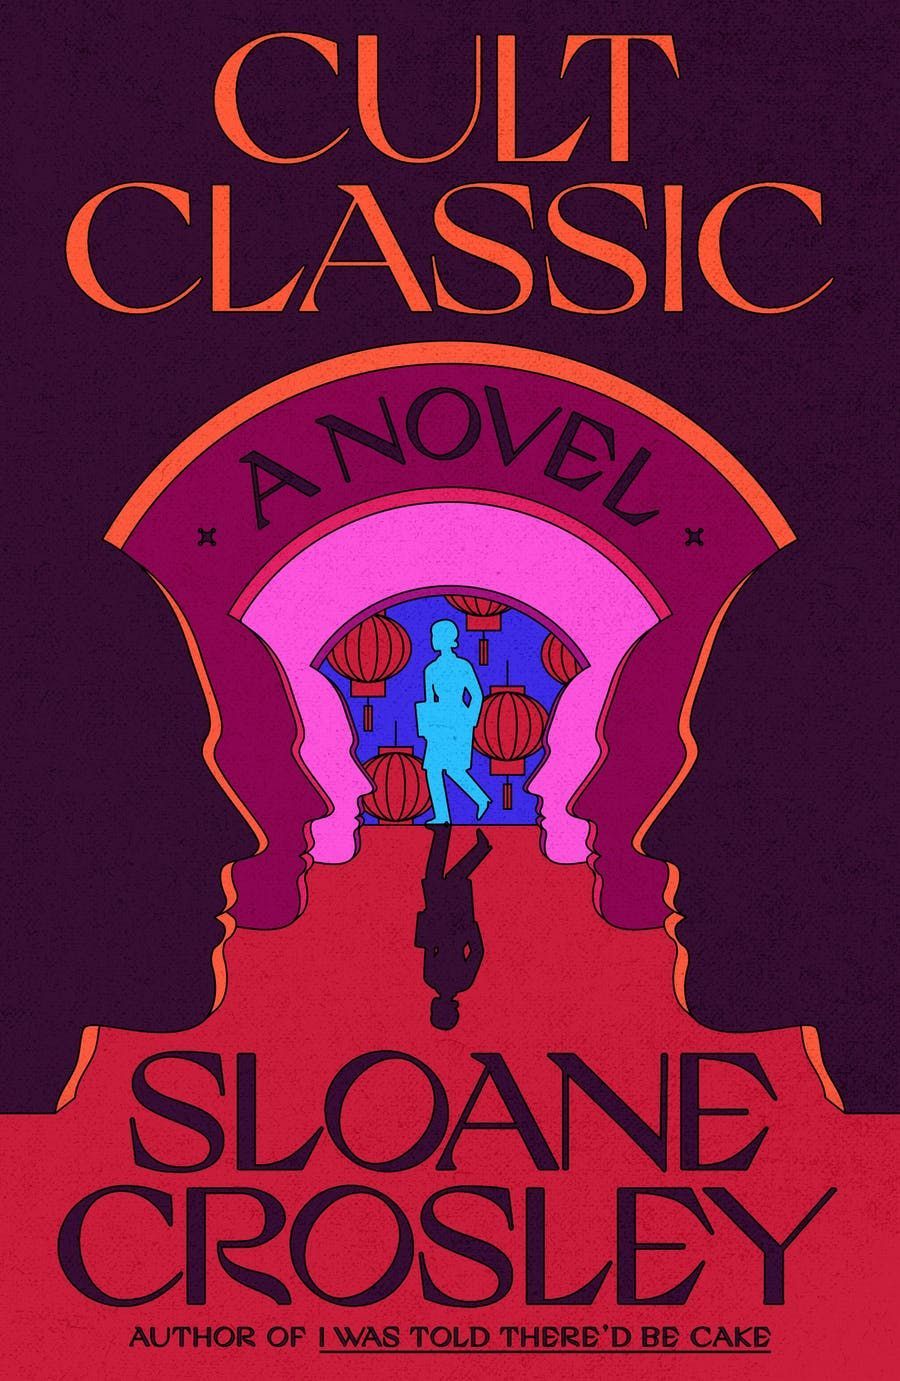 It’s Not Me, It’s You: On Sloane Crosley’s “Cult Classic”